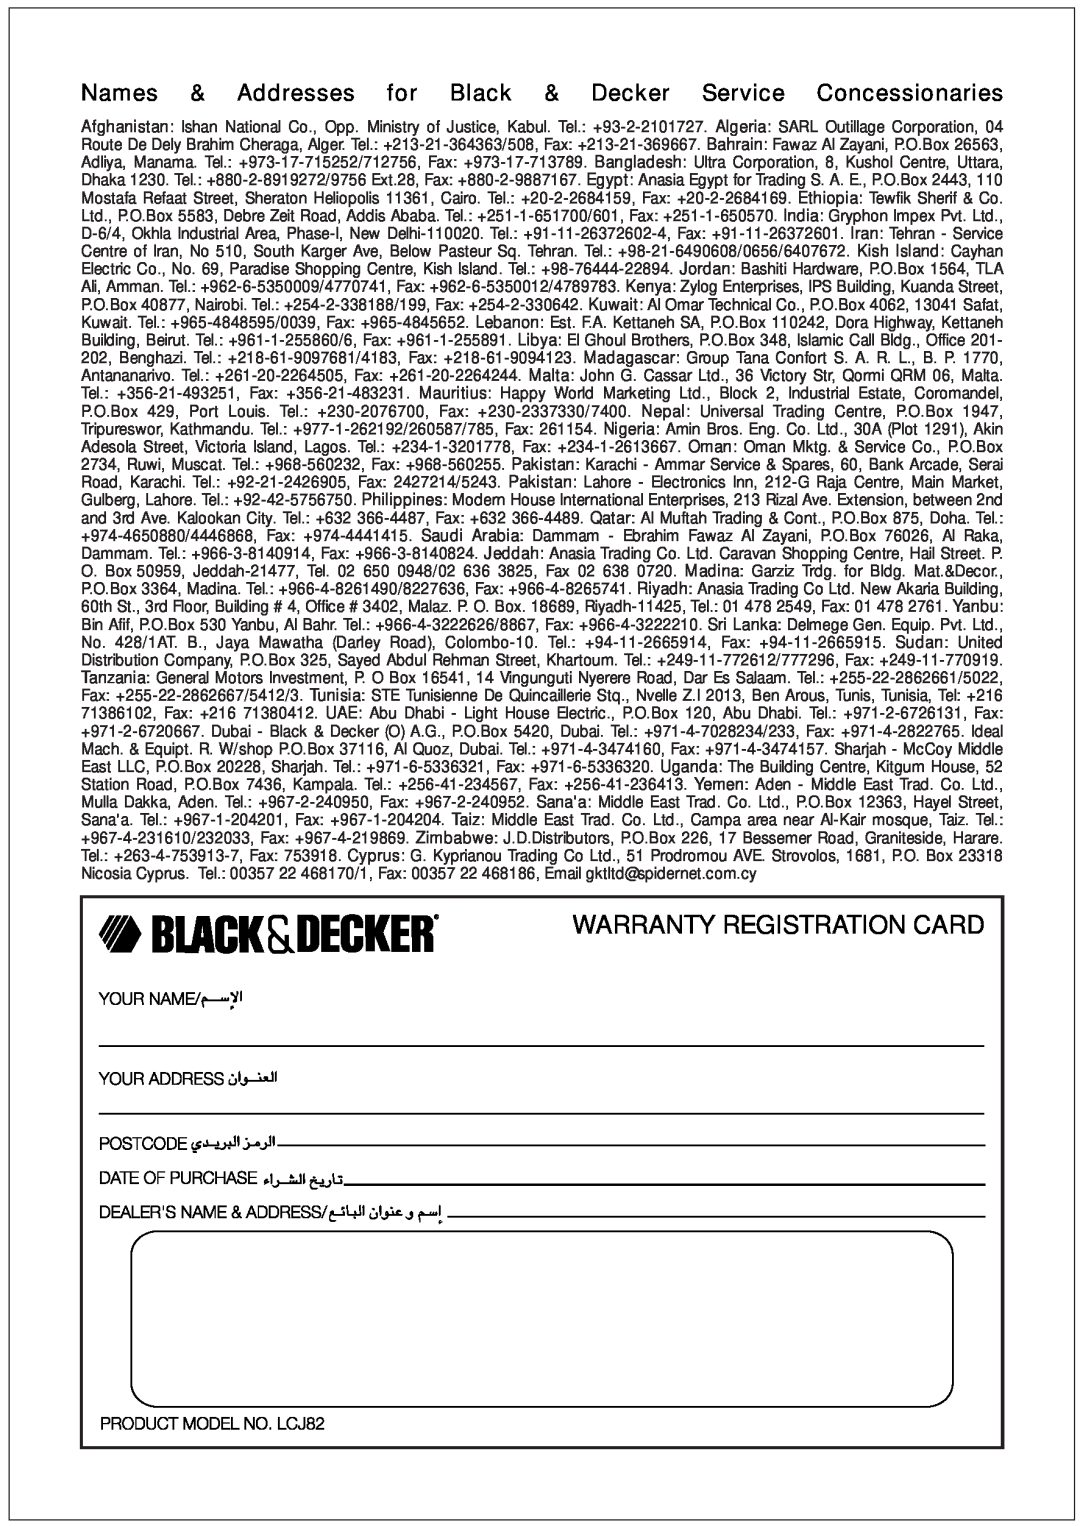 Black & Decker LCJ82 manual Warranty Registration Card, Names & Addresses for Black & Decker Service Concessionaries 